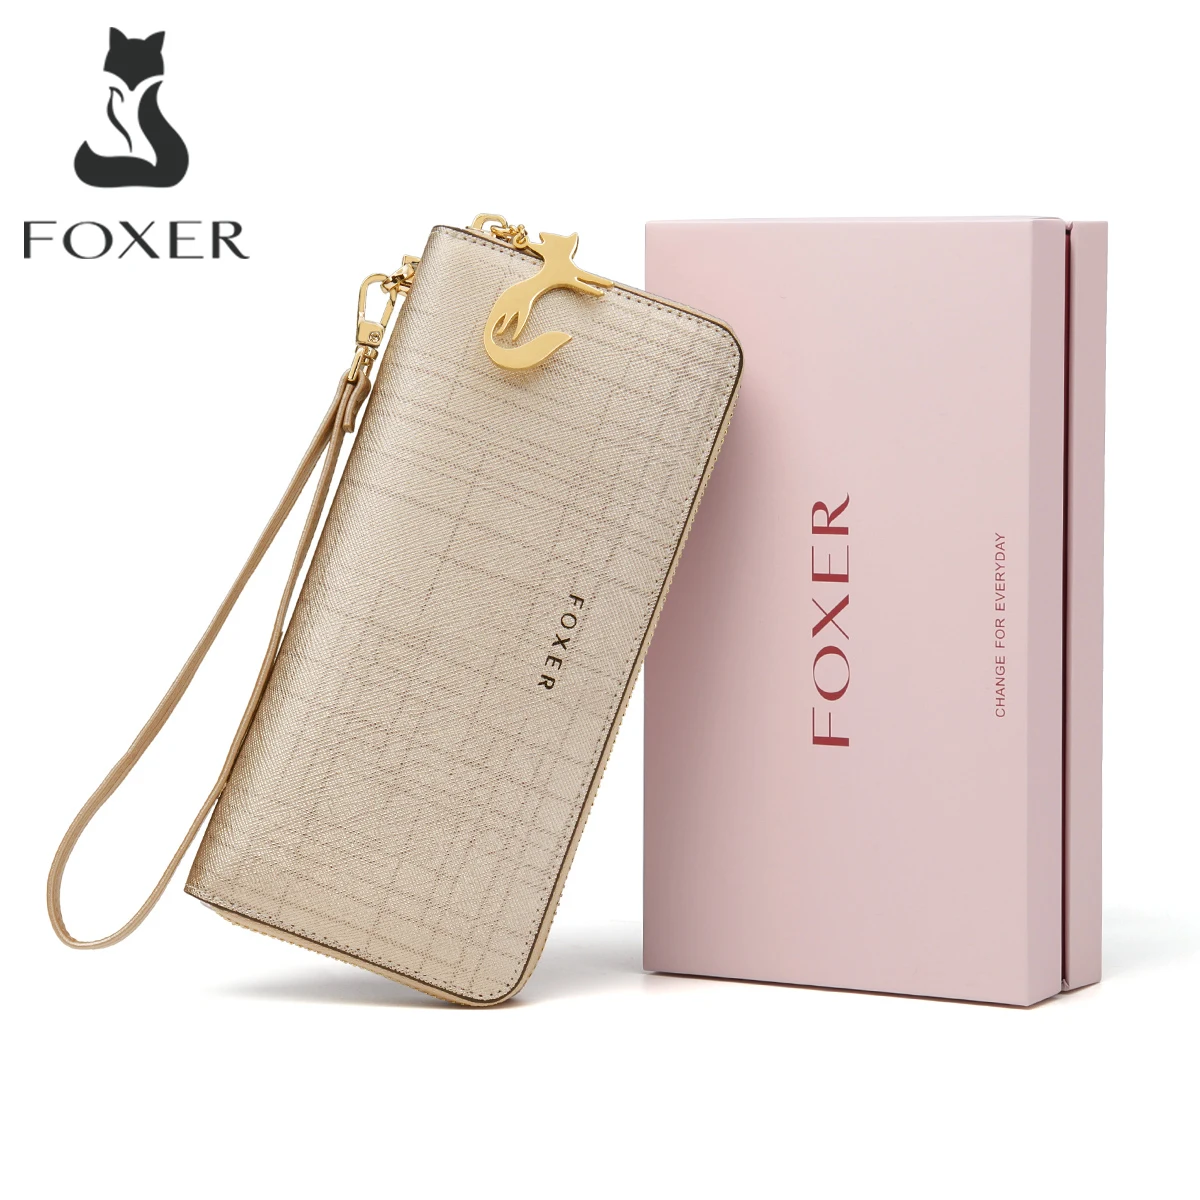 FOXER Women Split Leather Wallet Bifold Clutch Bag with Wristlet Fashion Card Holder Coin Purse Cellphone Bag Female Money Bag